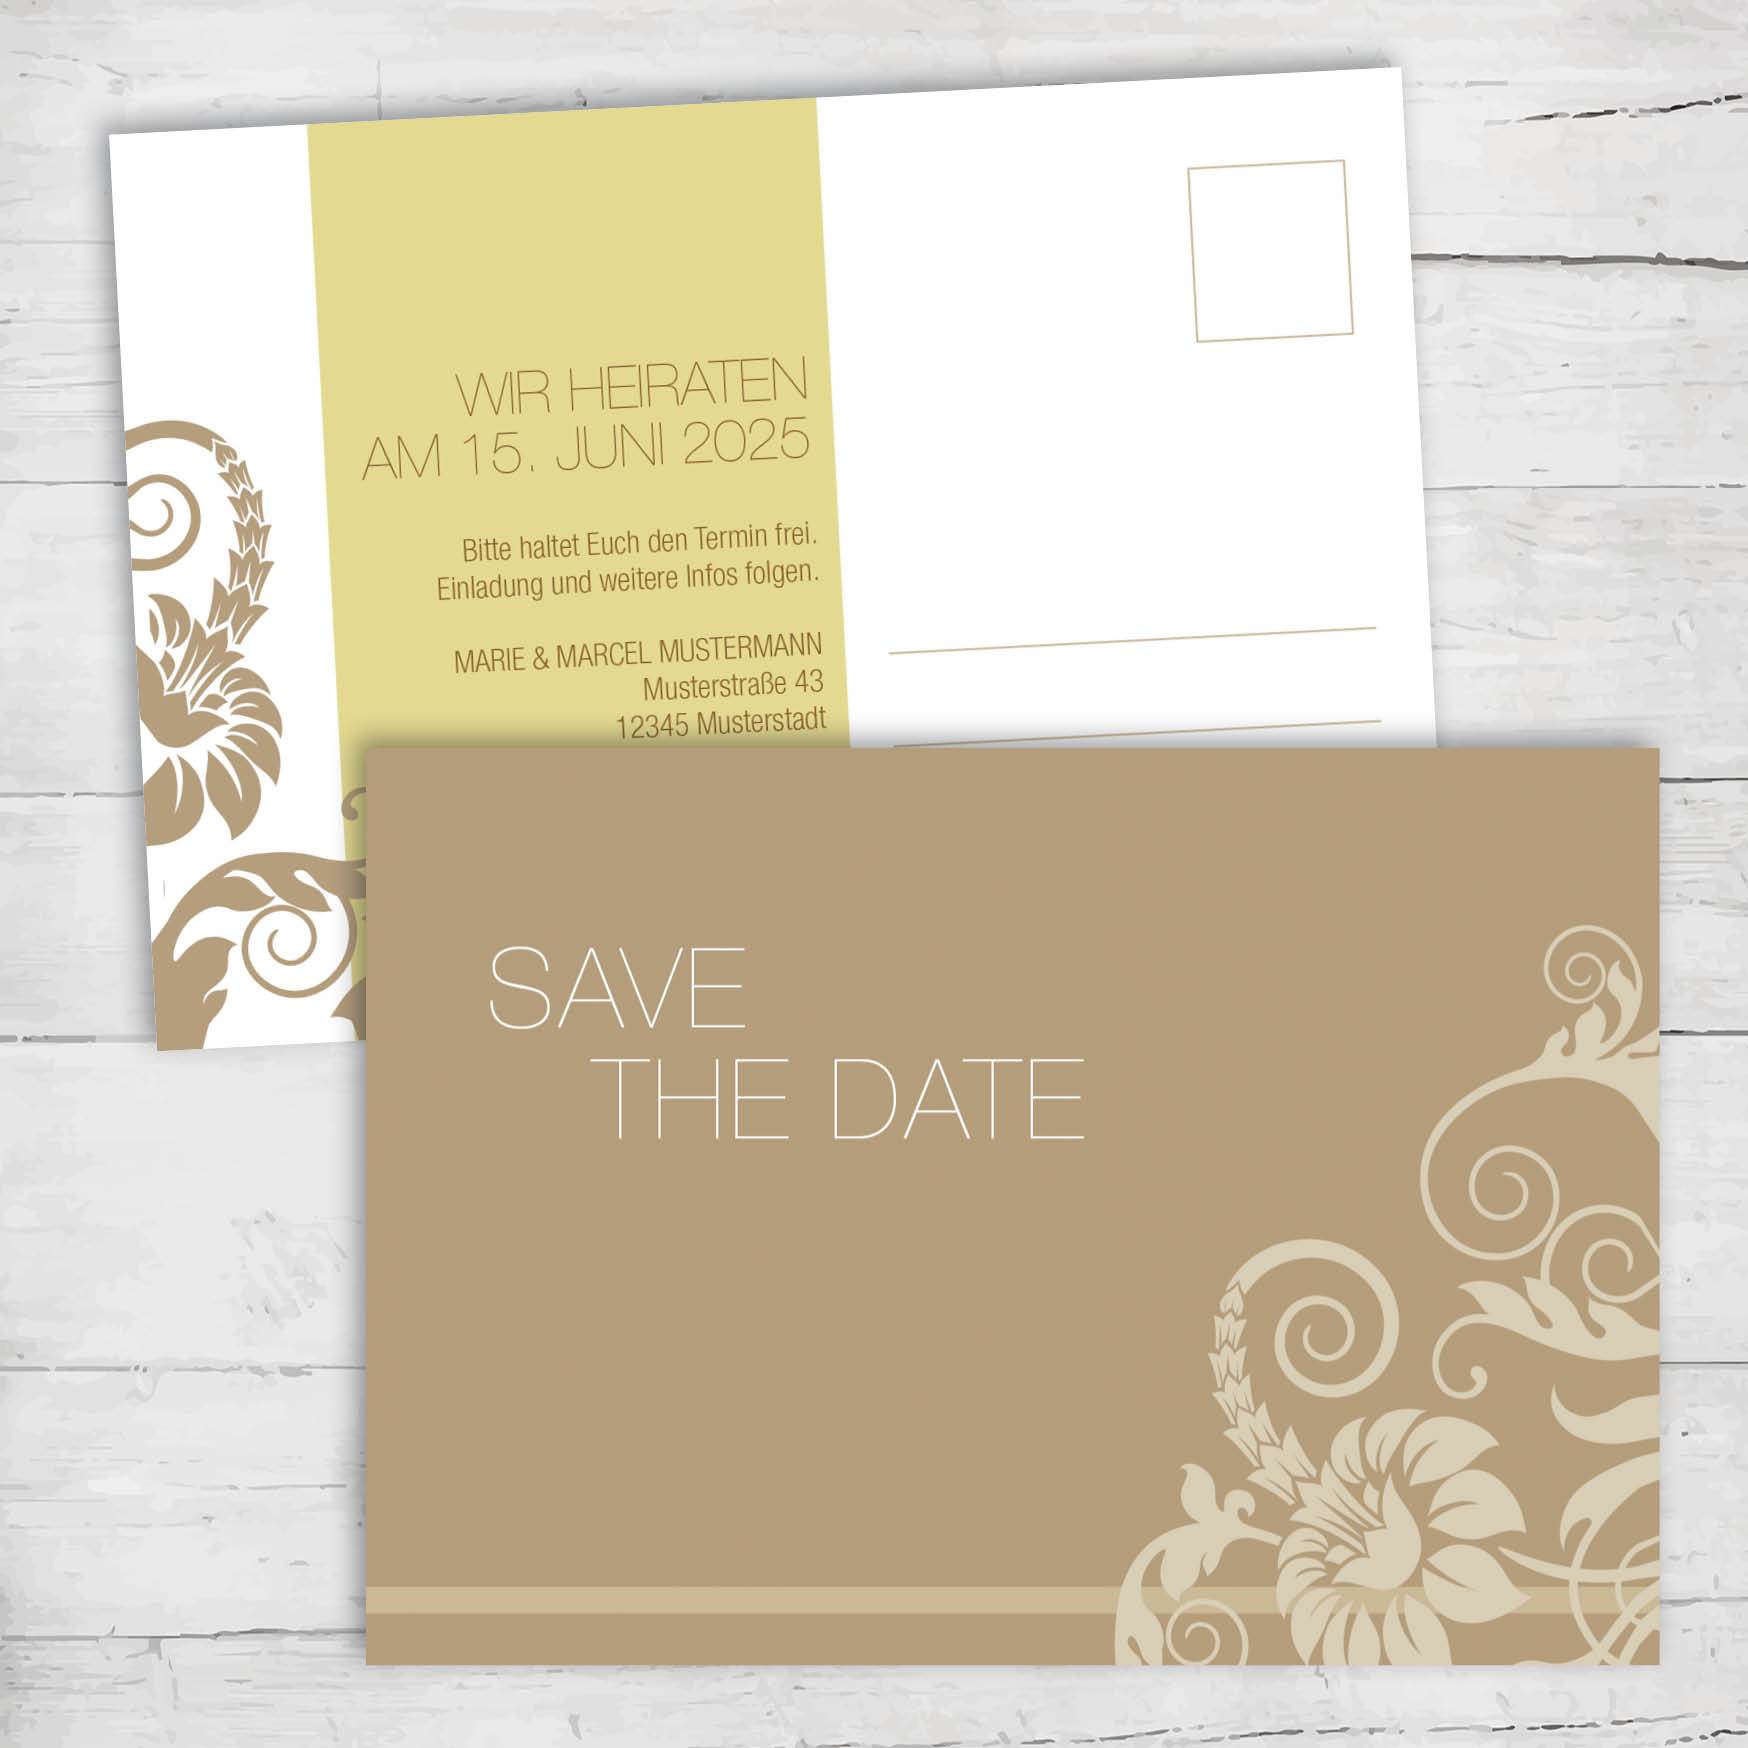 Save the Date Karten: Pavillon Individuelle Einladung